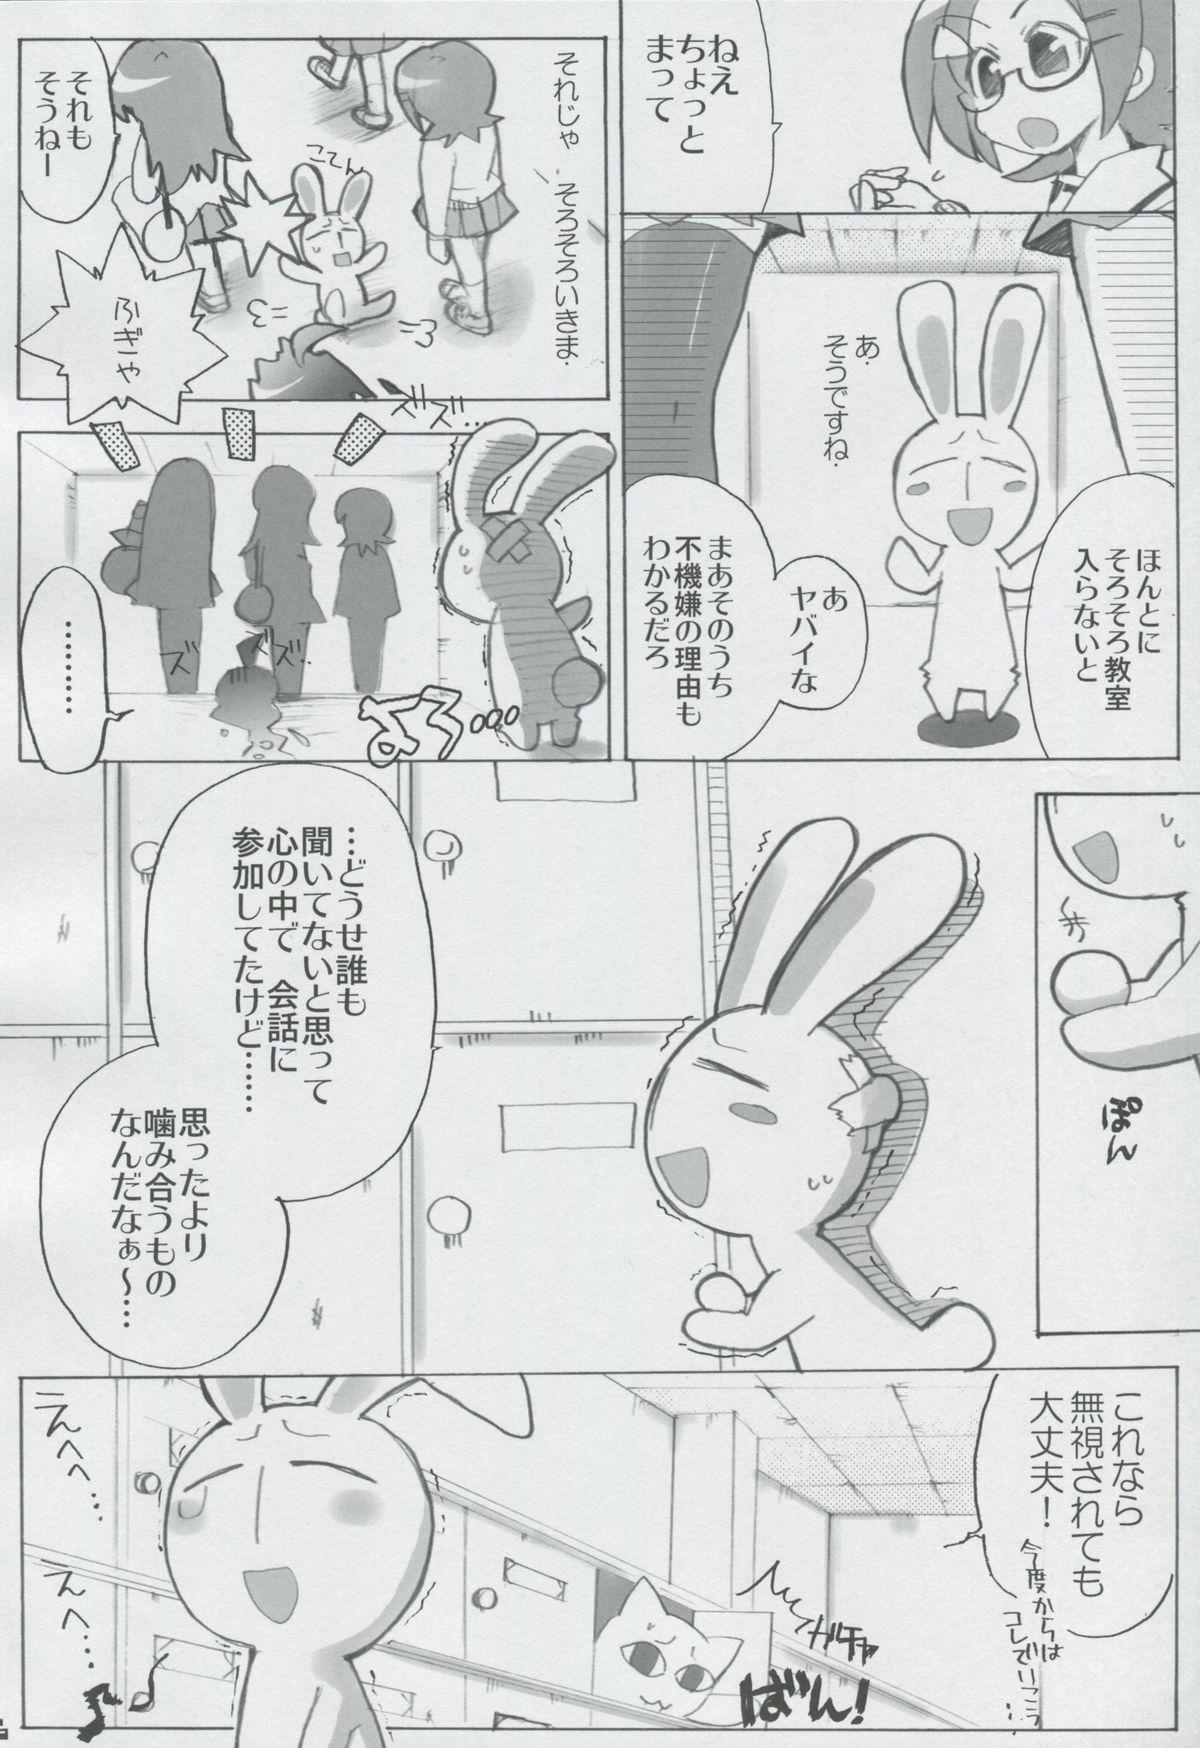 Teenie Momo Tsuki Monsters 1st-half - Pani poni dash Little - Page 5